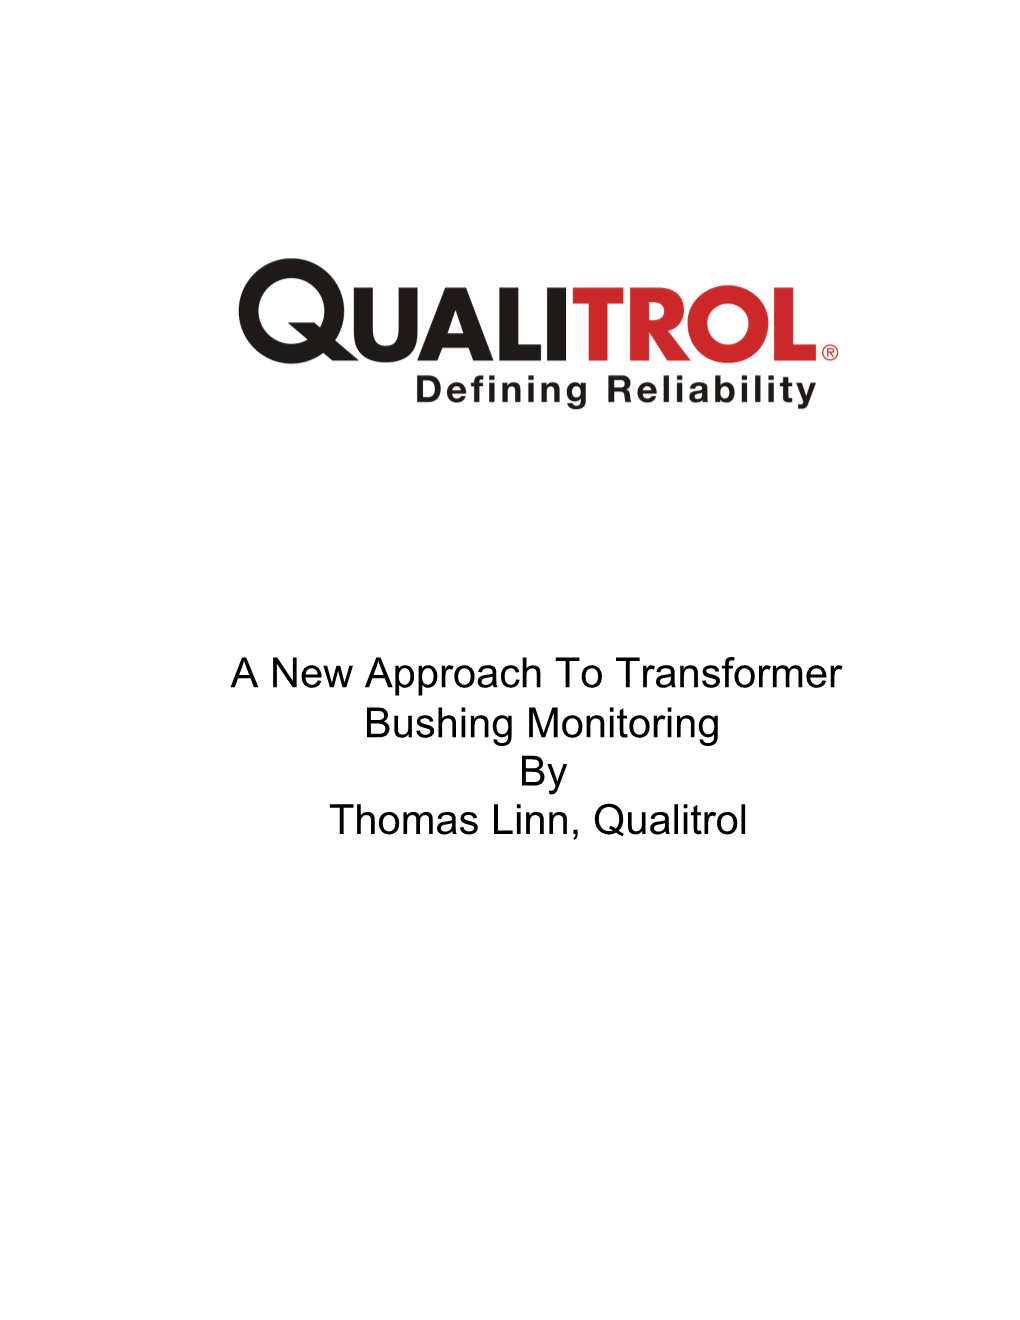 A New Approach to Transformer Bushing Monitoring by Thomas Linn, Qualitrol Abstract